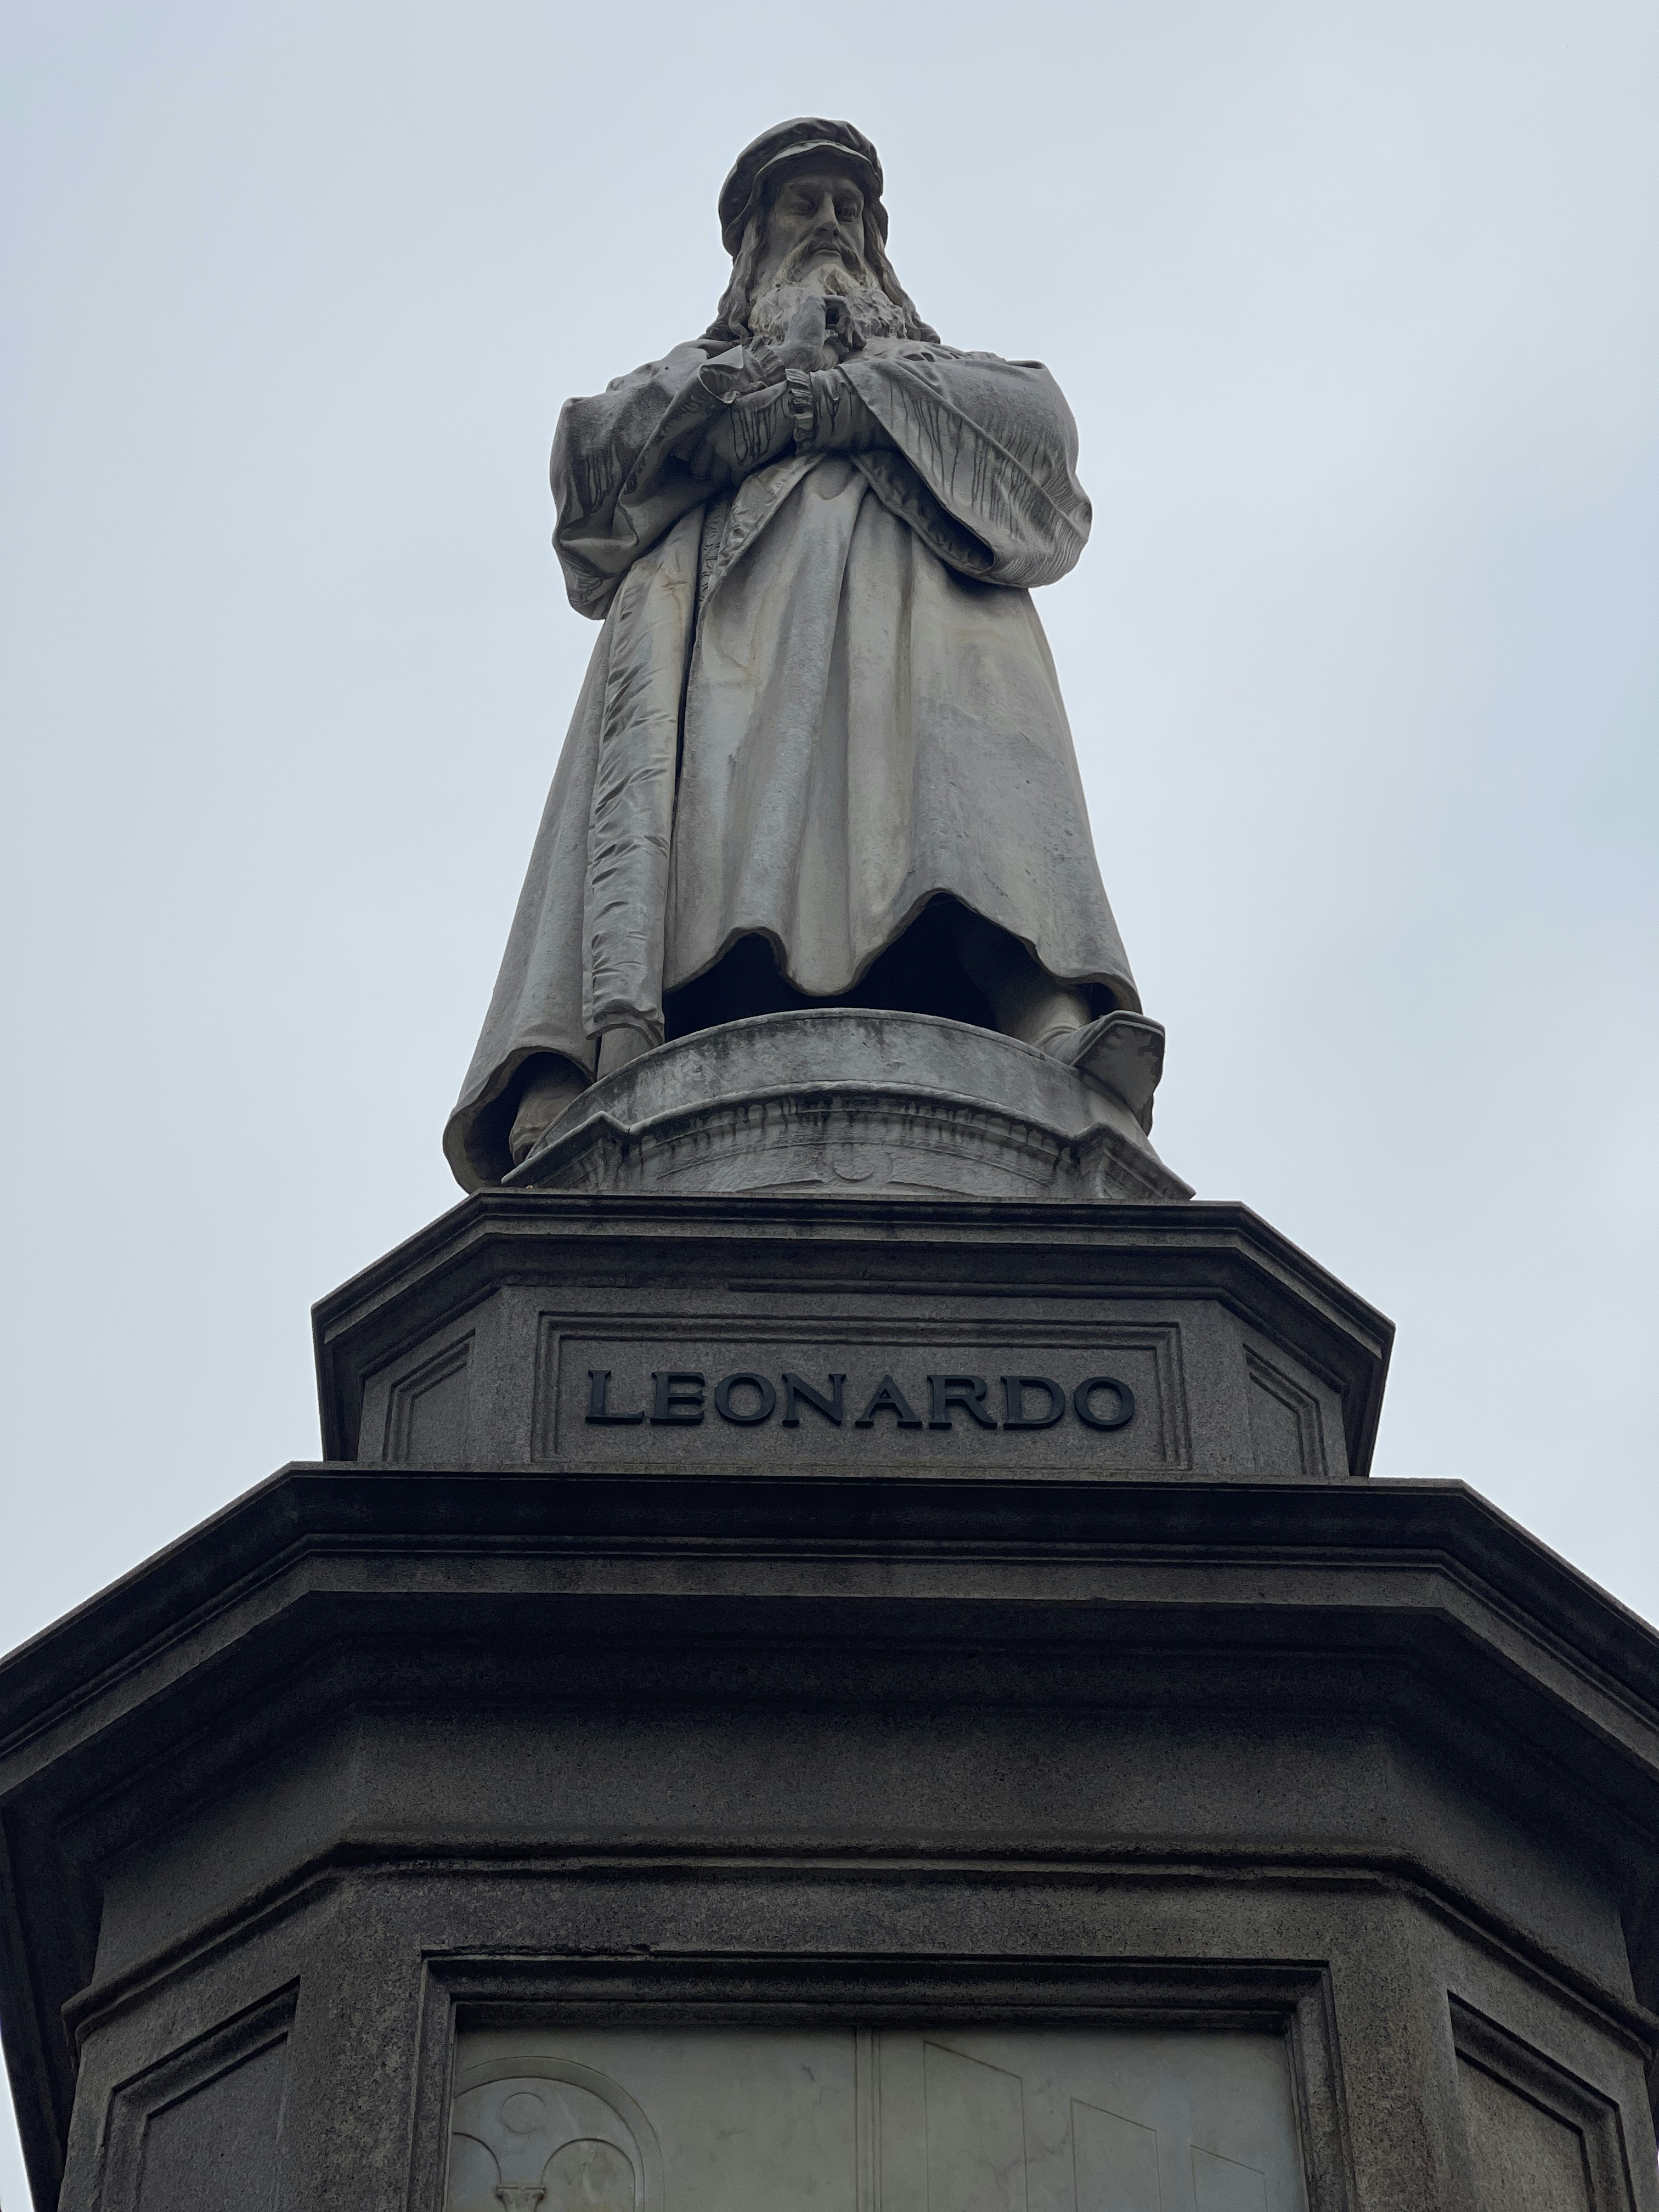 Statue of Leonardo da Vinci in Milan sculpted in 1872 by Pietro Magni. It is outside the Galleria Vittorio Emanuele II, the famous shopping centre.